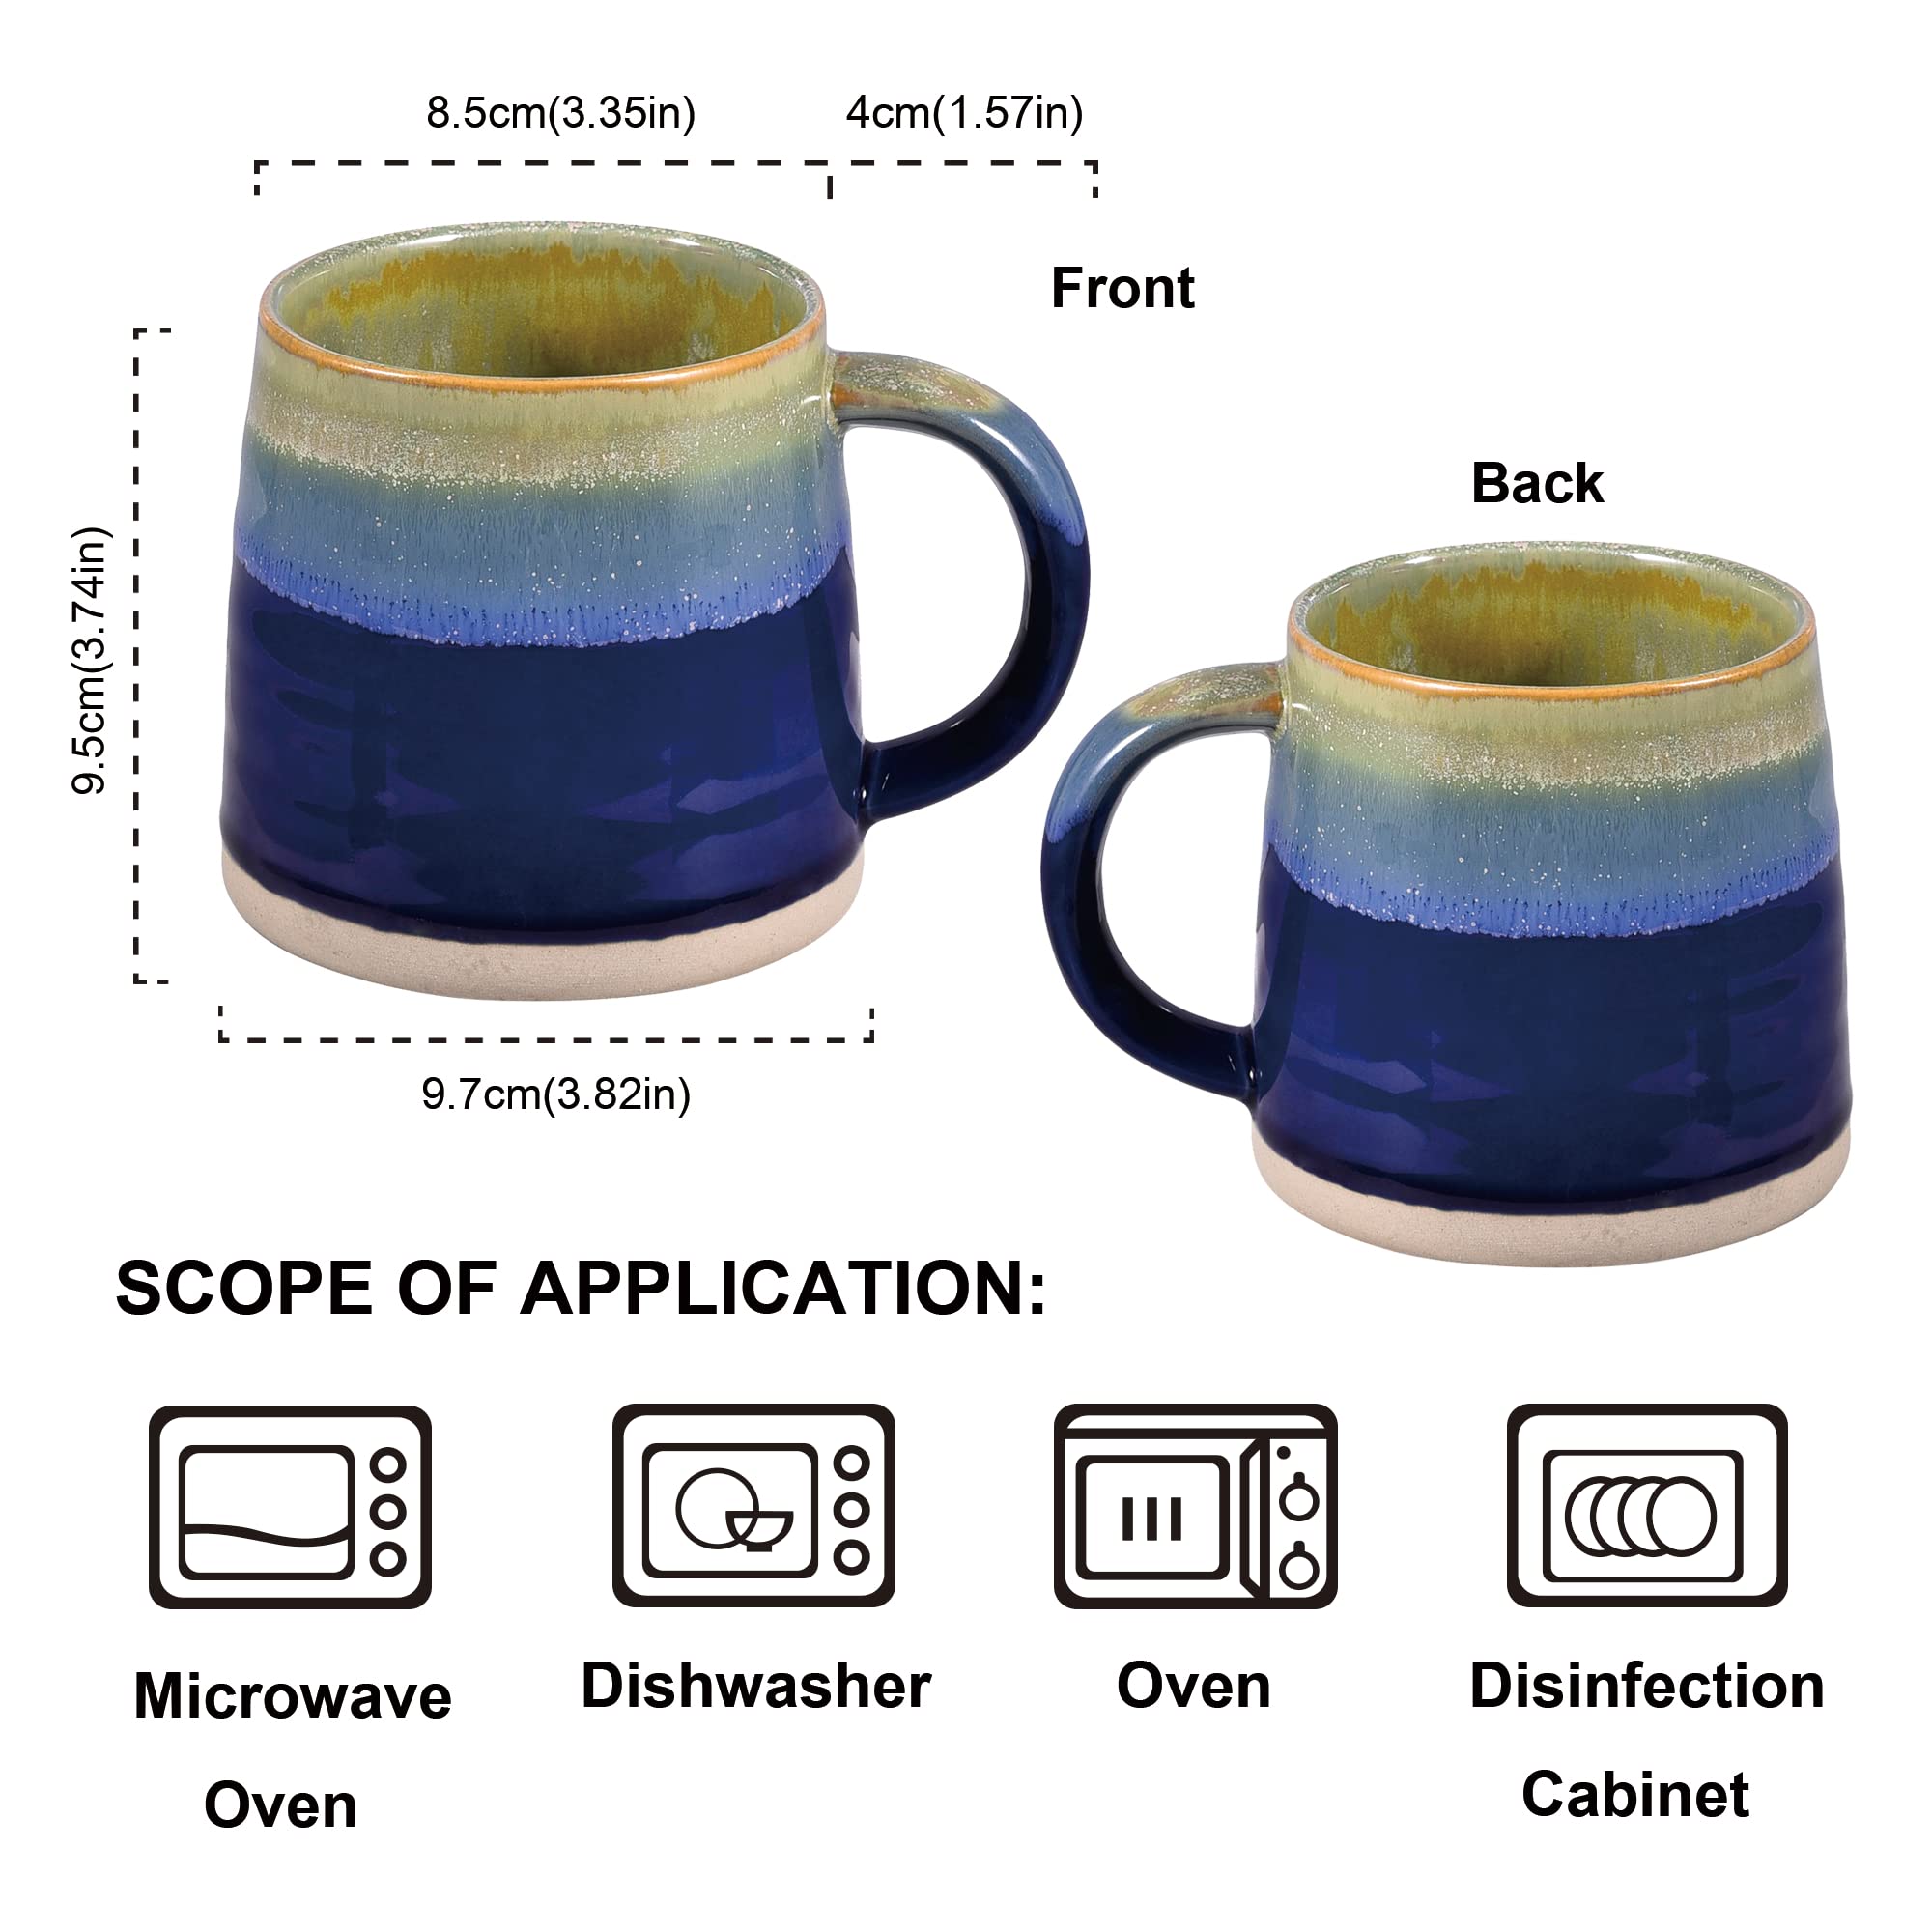 Blue Tone Reactive Glaze Mug 13.5 Ounce, Porcelain Mug for Coffee, Tea, Milk or Other Liquid, Kiln-Change Technique Unique Cups for Home or Office